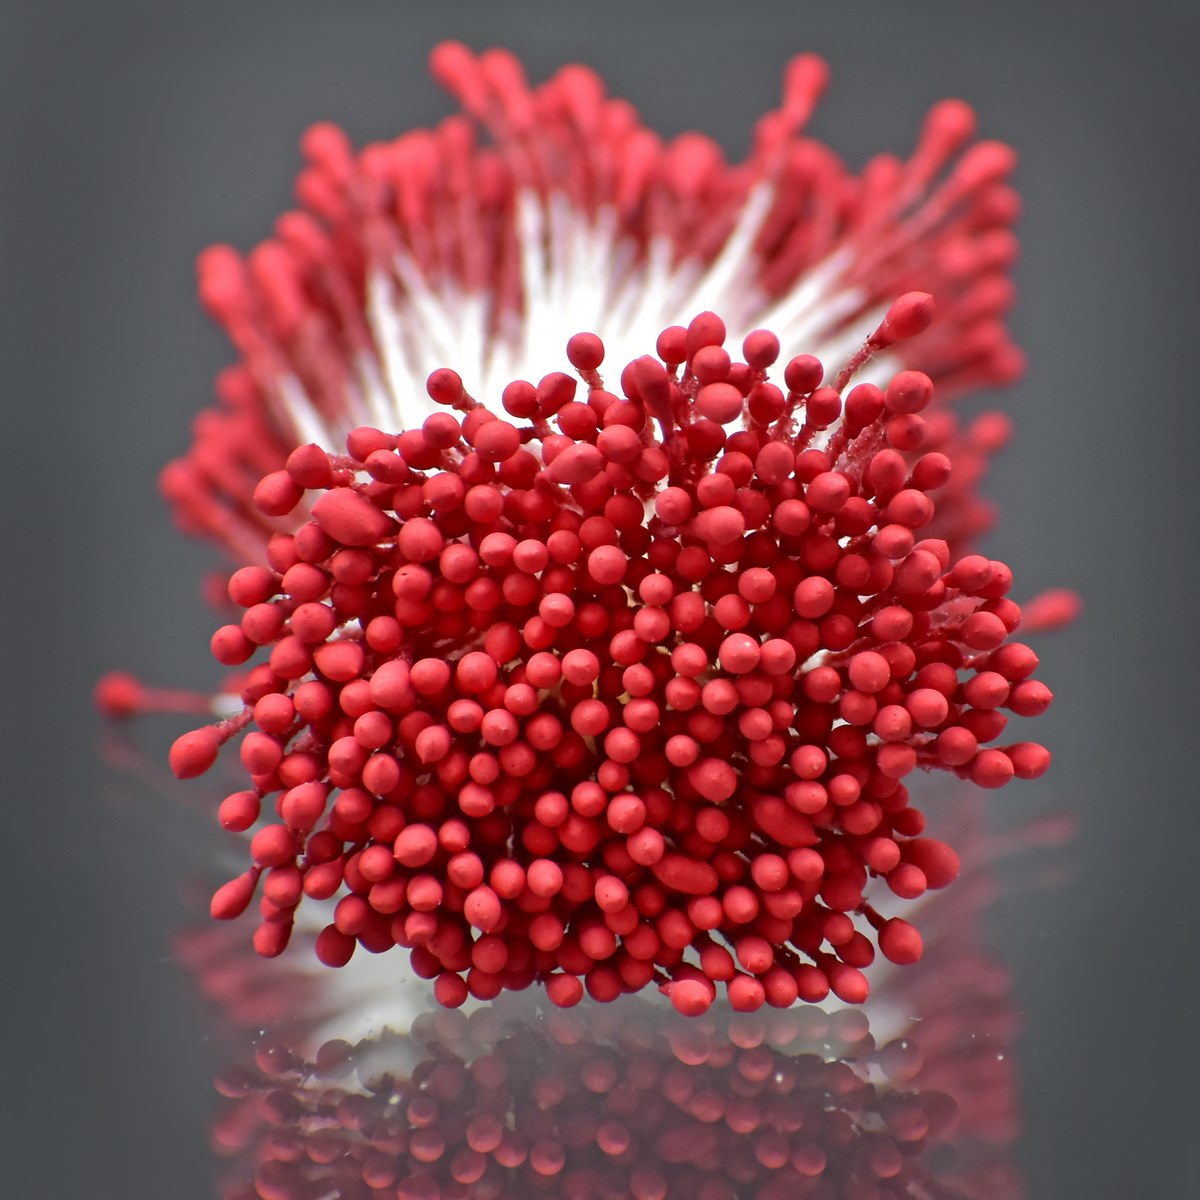 jags-mumbai Artificial Flower Artificial Flower Polons Pack Of 5 Red AFP4-RD